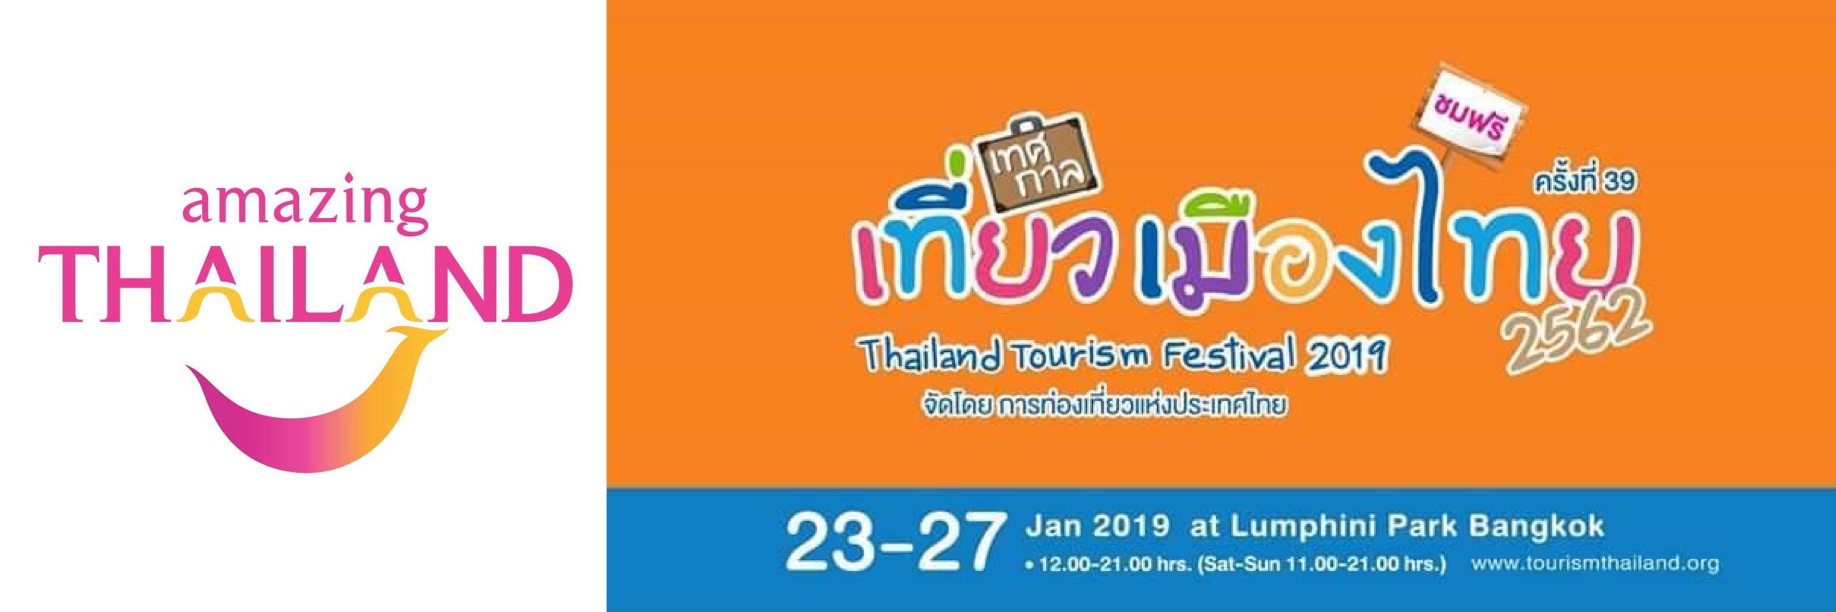 thailandtourismfestival2019coverfbmontage